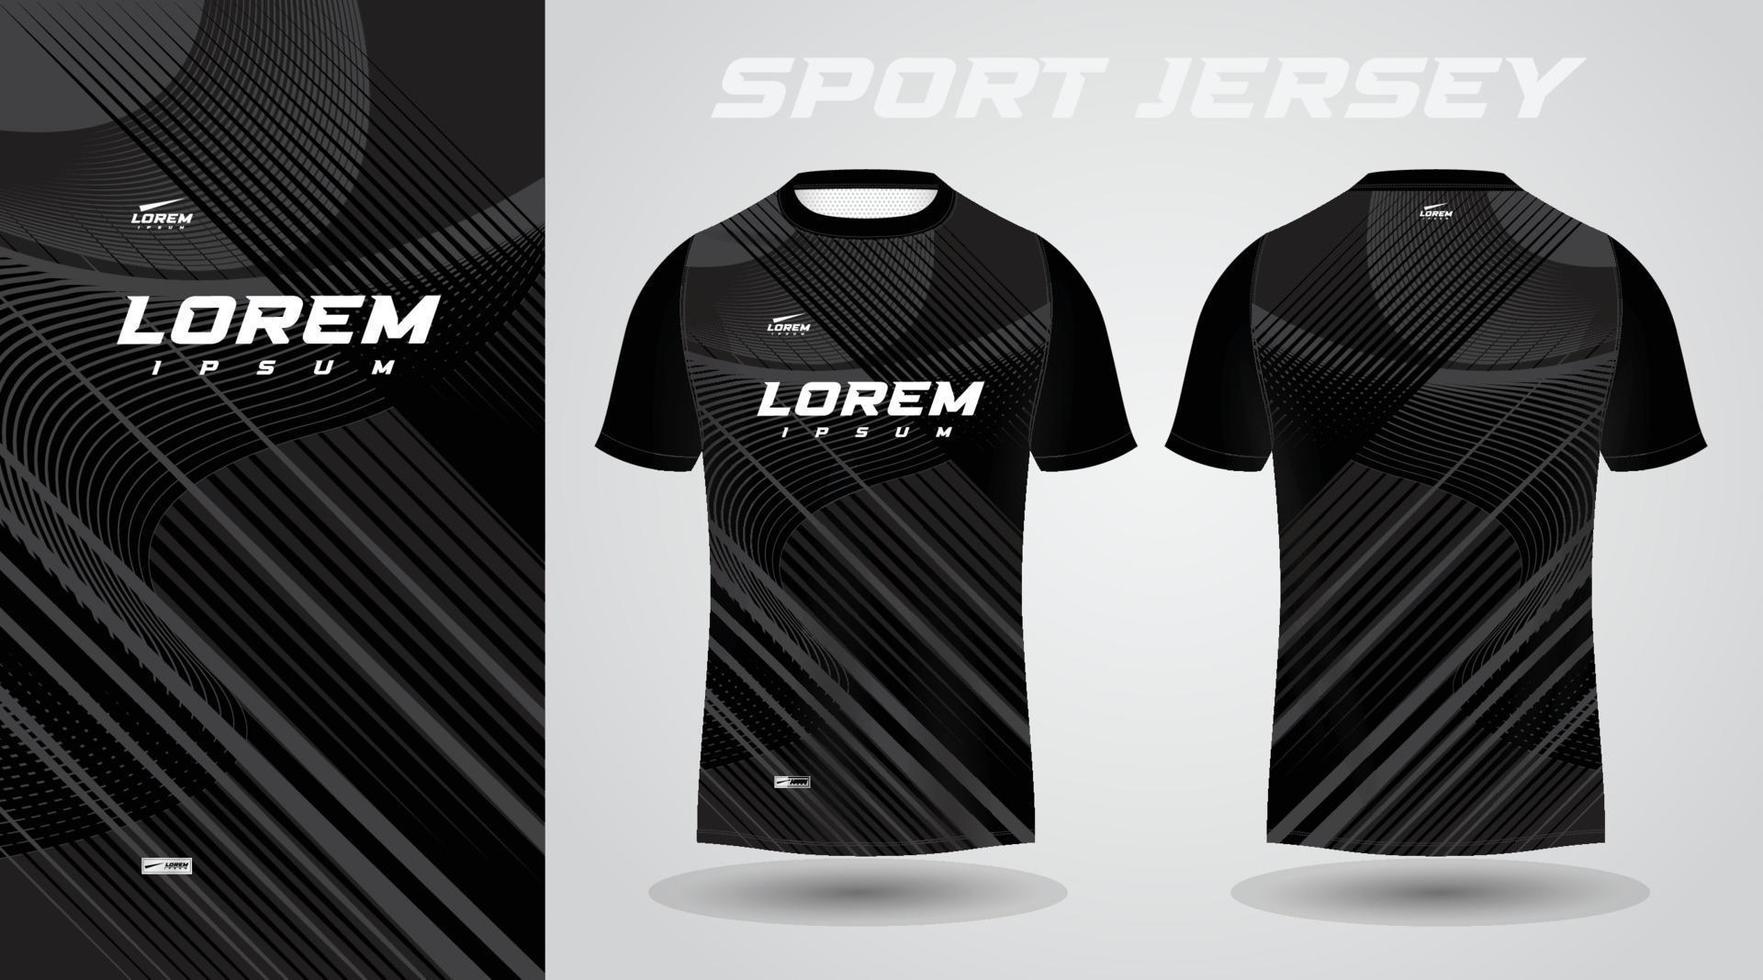 zwart voetbal Jersey of Amerikaans voetbal Jersey sjabloon ontwerp voor sportkleding. Amerikaans voetbal t-shirt mockup vector